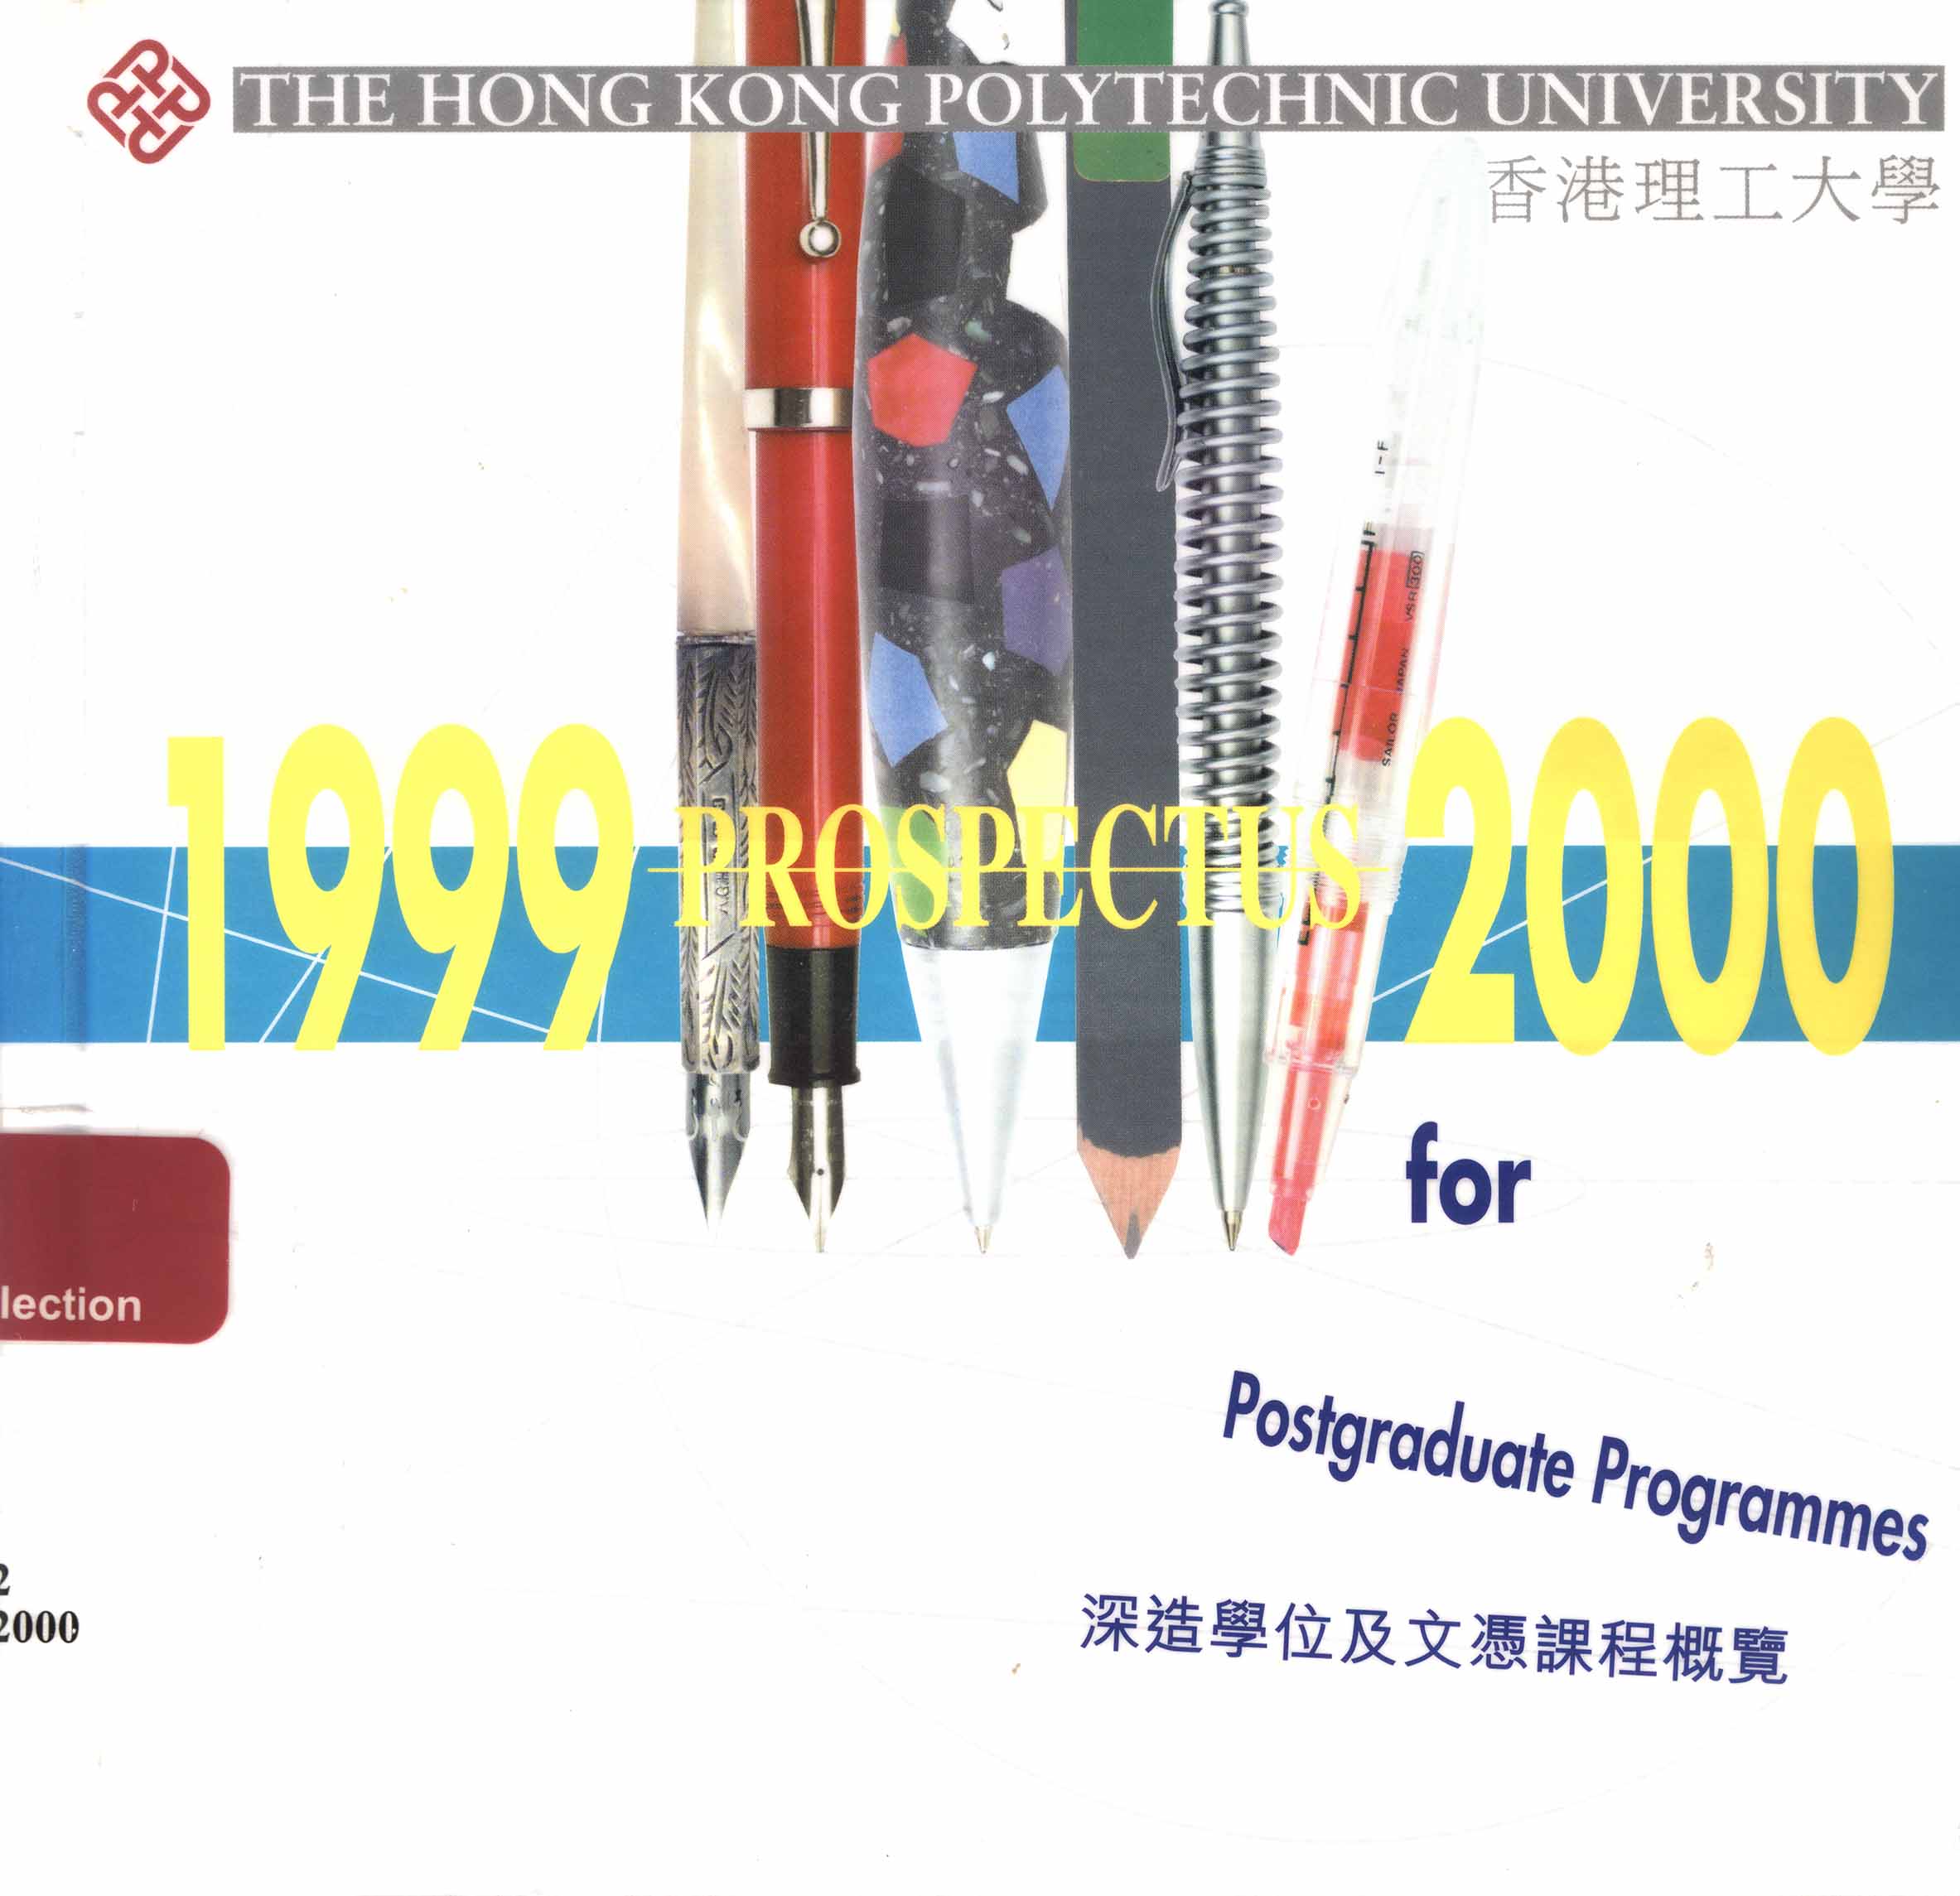 Prospectus for postgraduate programmes [1999/2000]